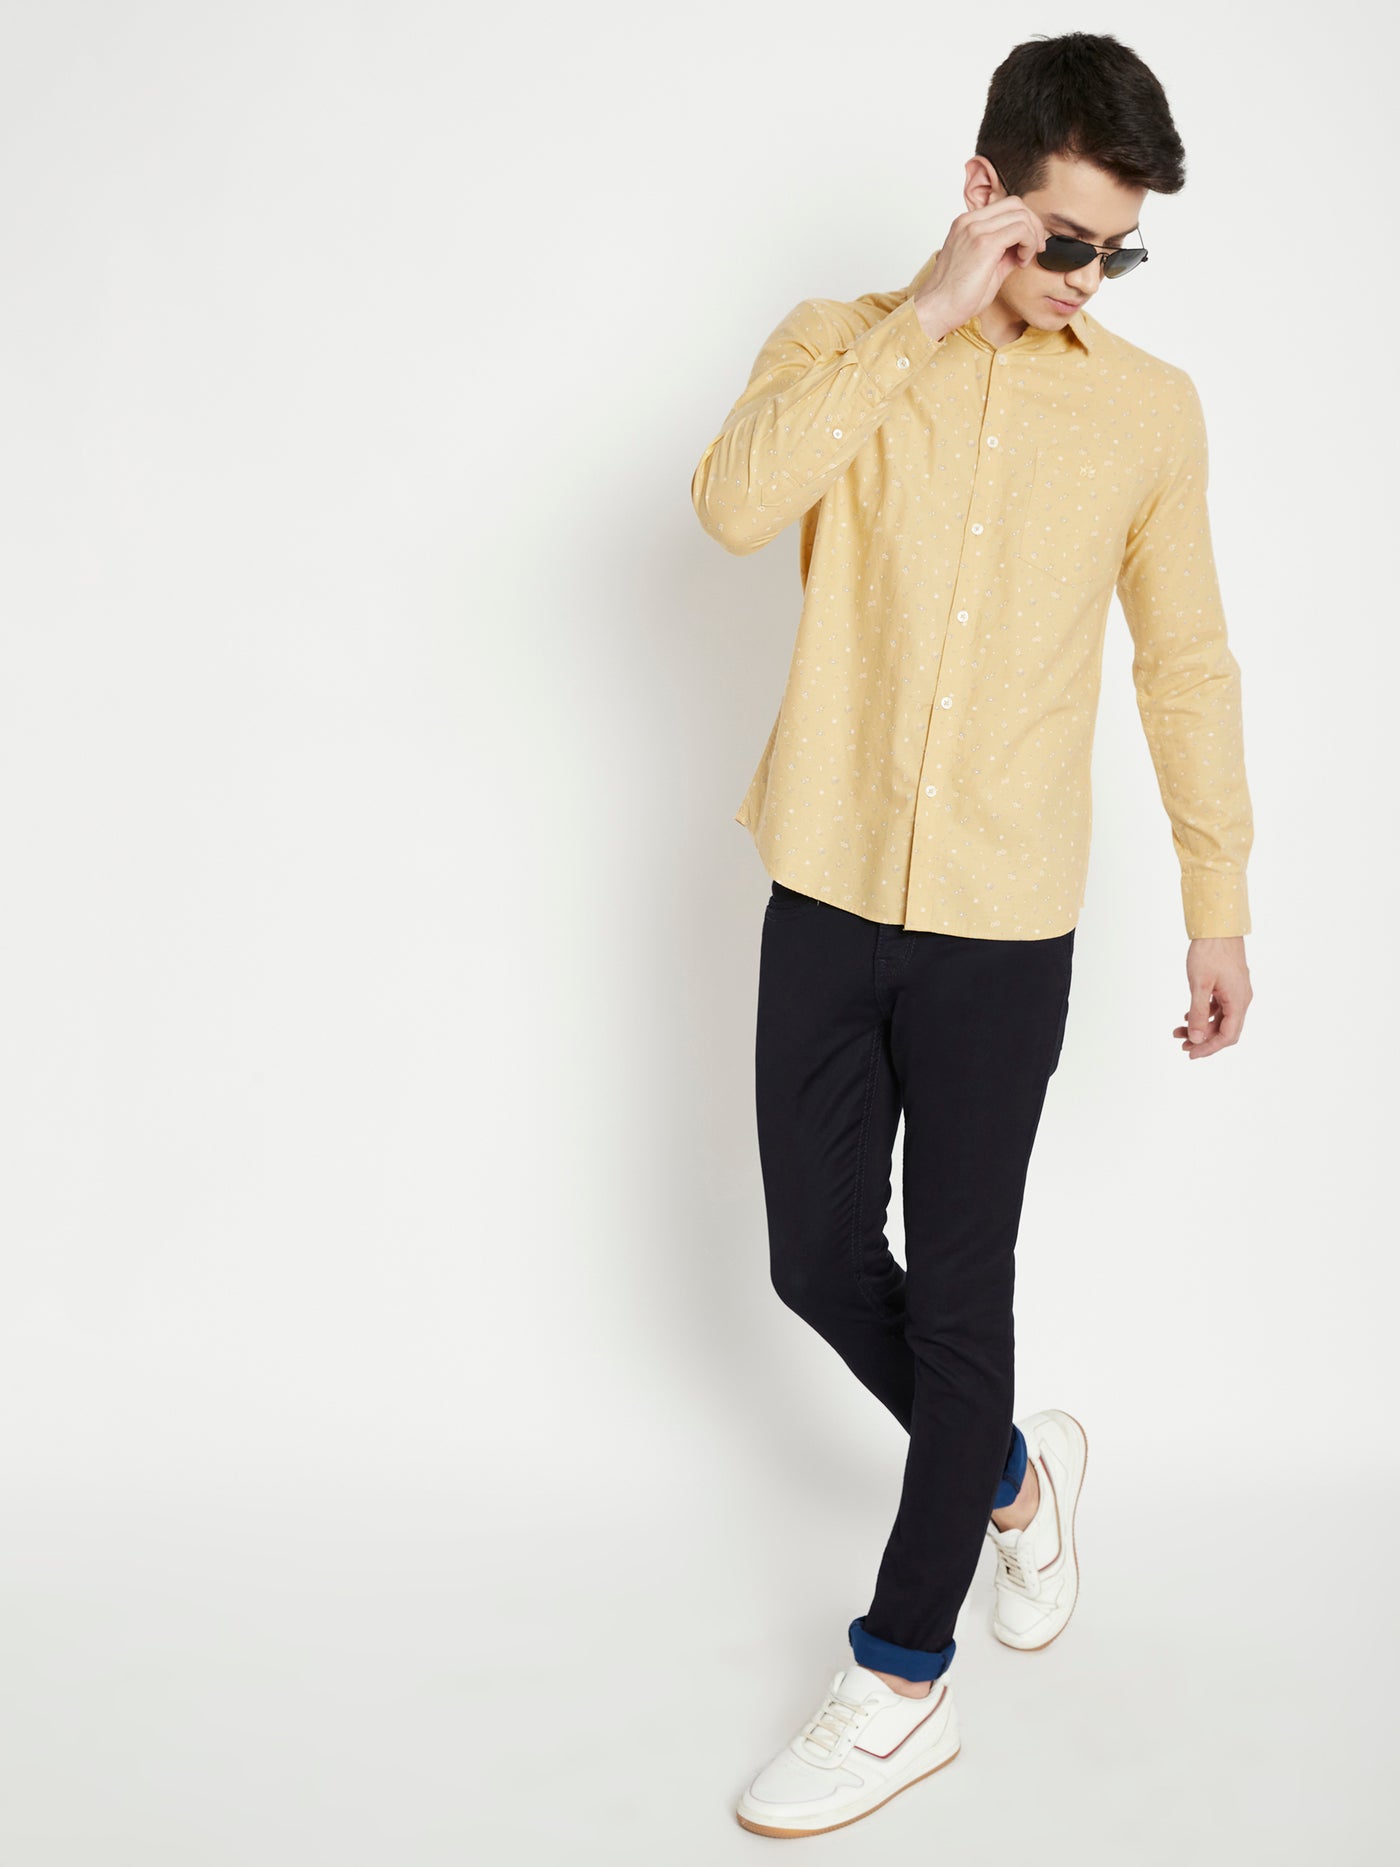 Yellow Floral Printed Slim Fit shirt - Men Shirts